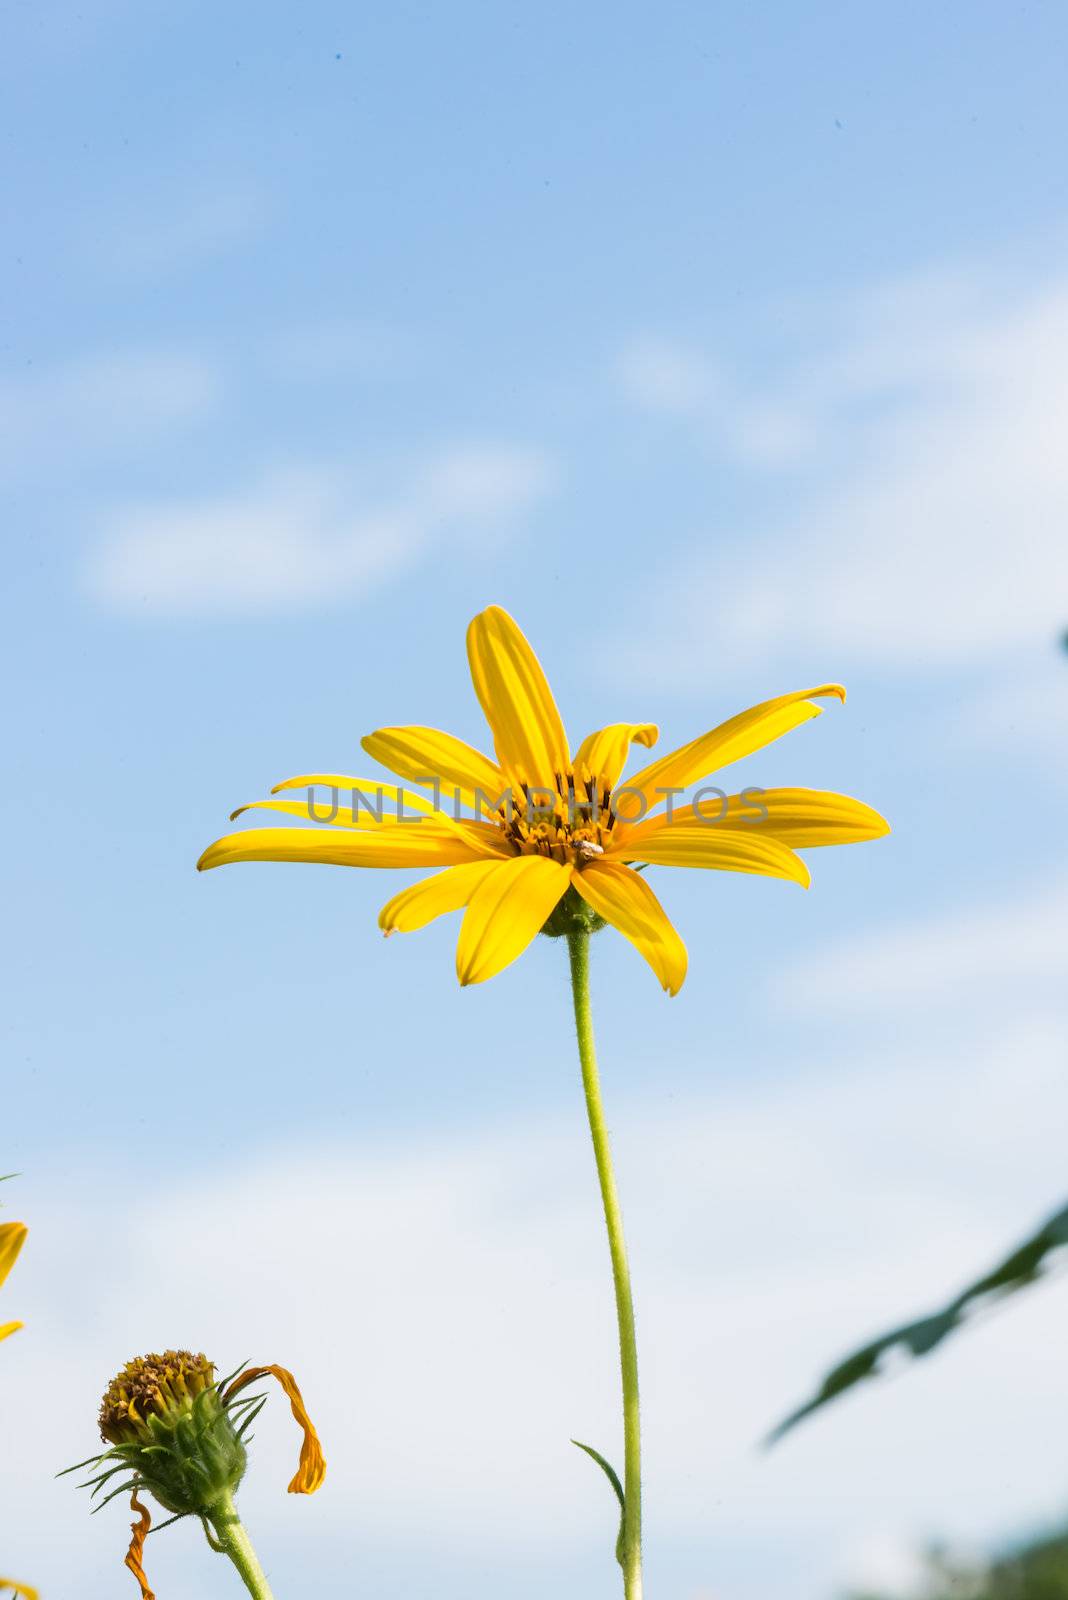 Yellow topinambur flowers (daisy family) against blue sky